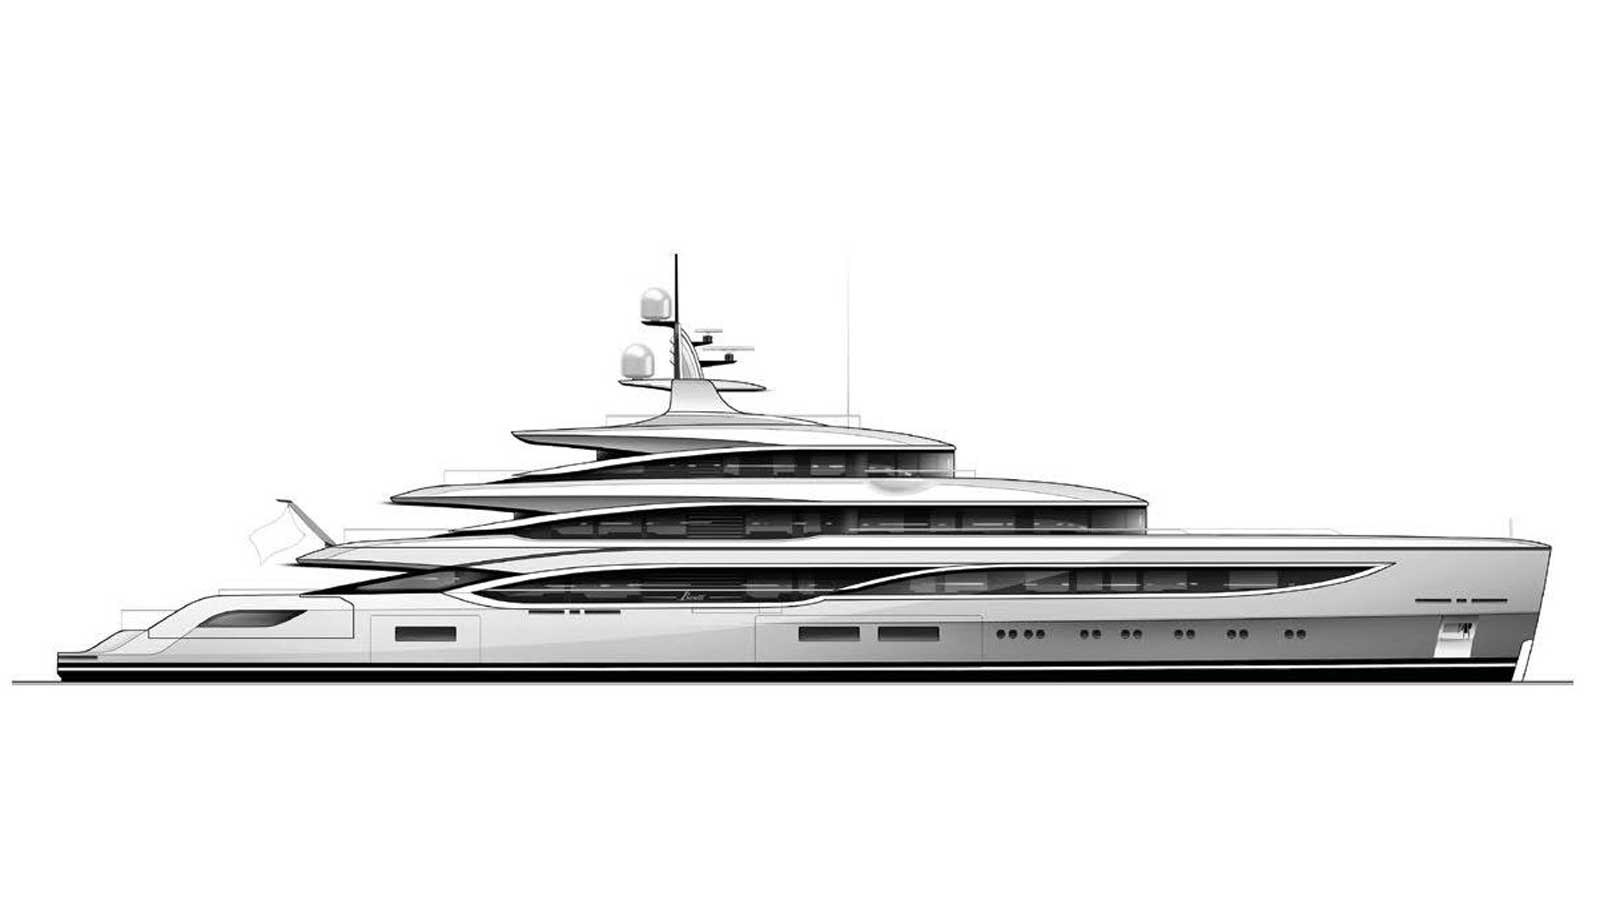 CHECKMATE yacht (Benetti, 44.2m, 2013)